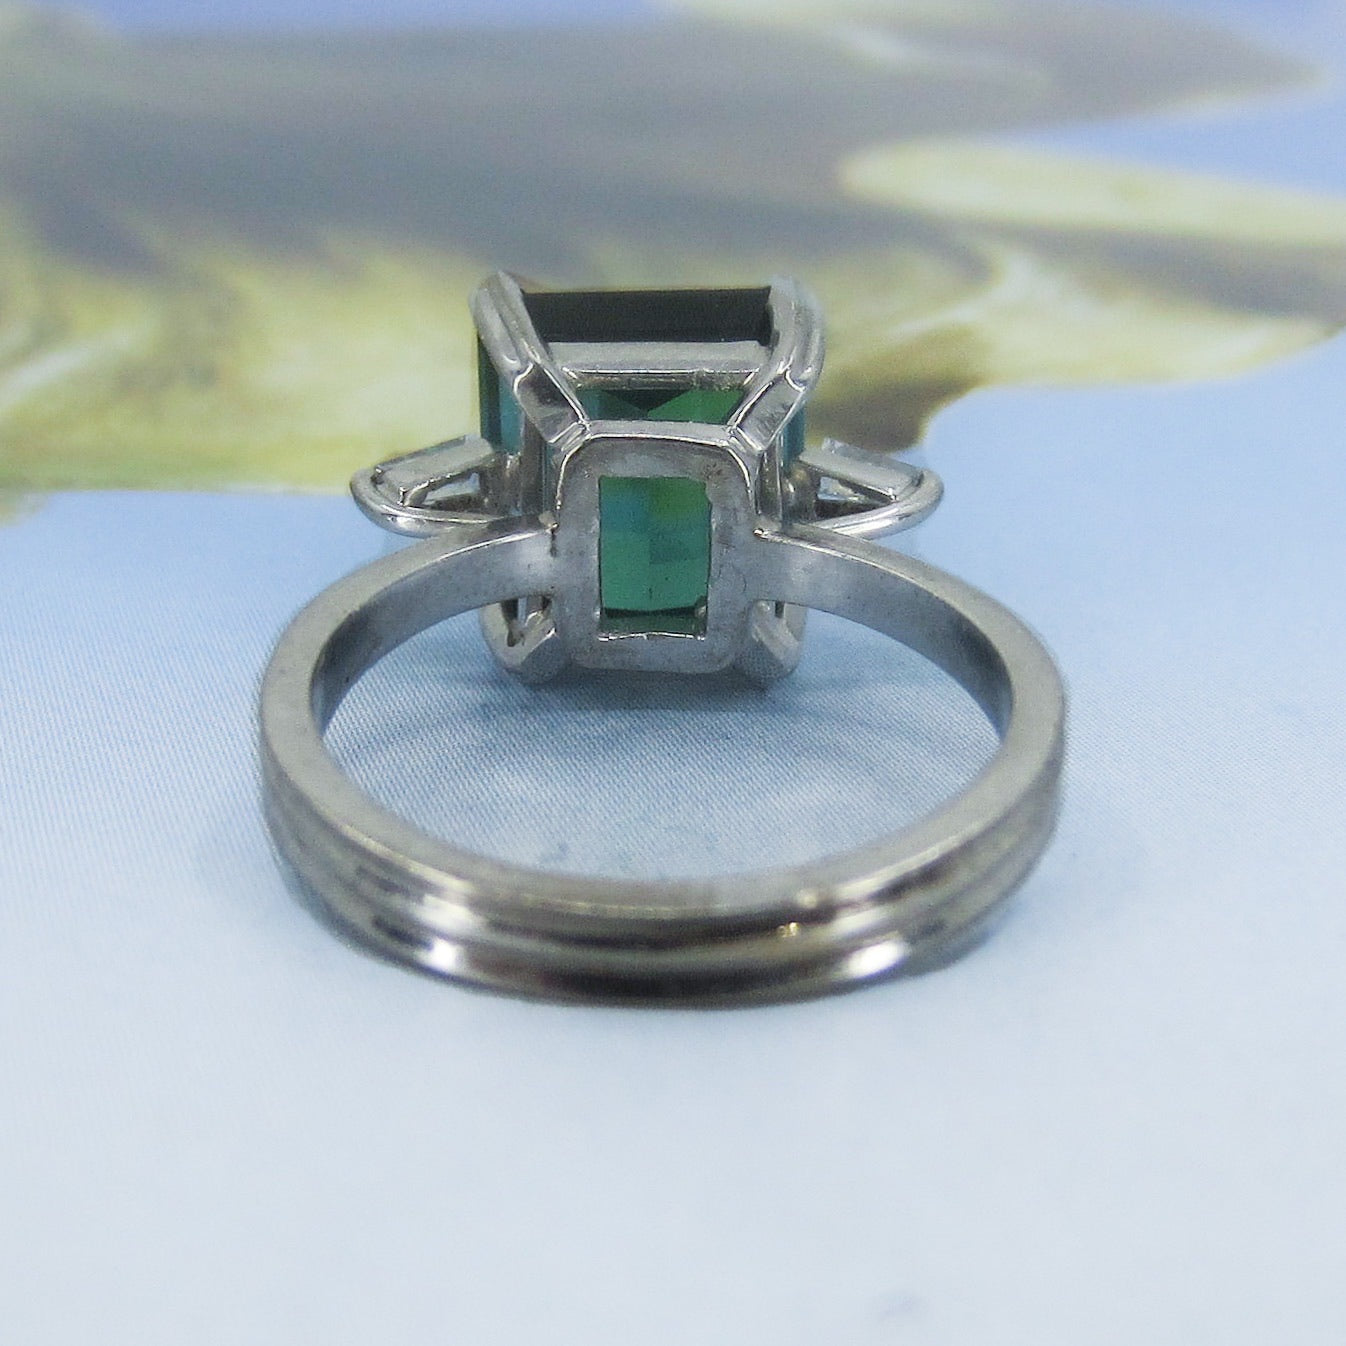 SOLD--Vintage Green Tourmaline and Diamond Ring 18k, H. Stern c. 1990